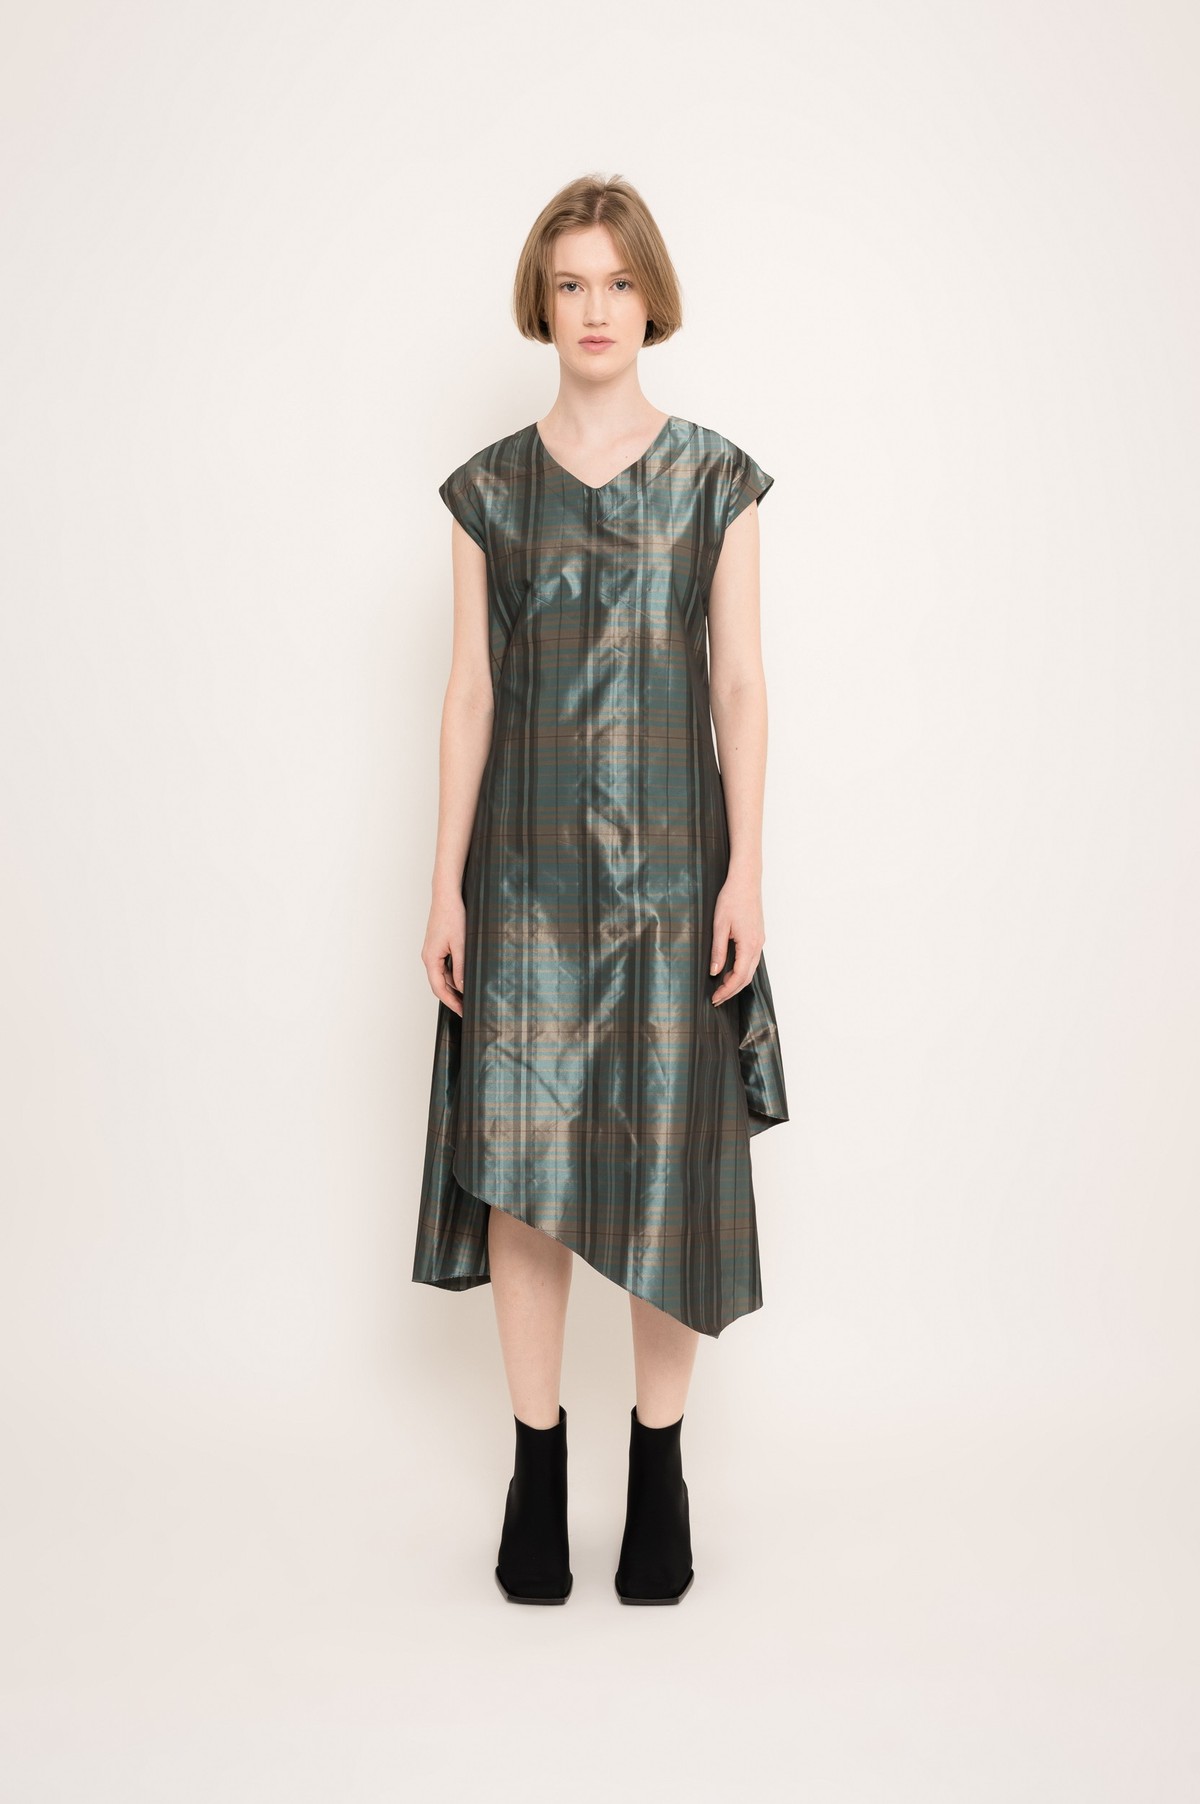 vestido assimétrico xadrez | plaid asymmetrical dress